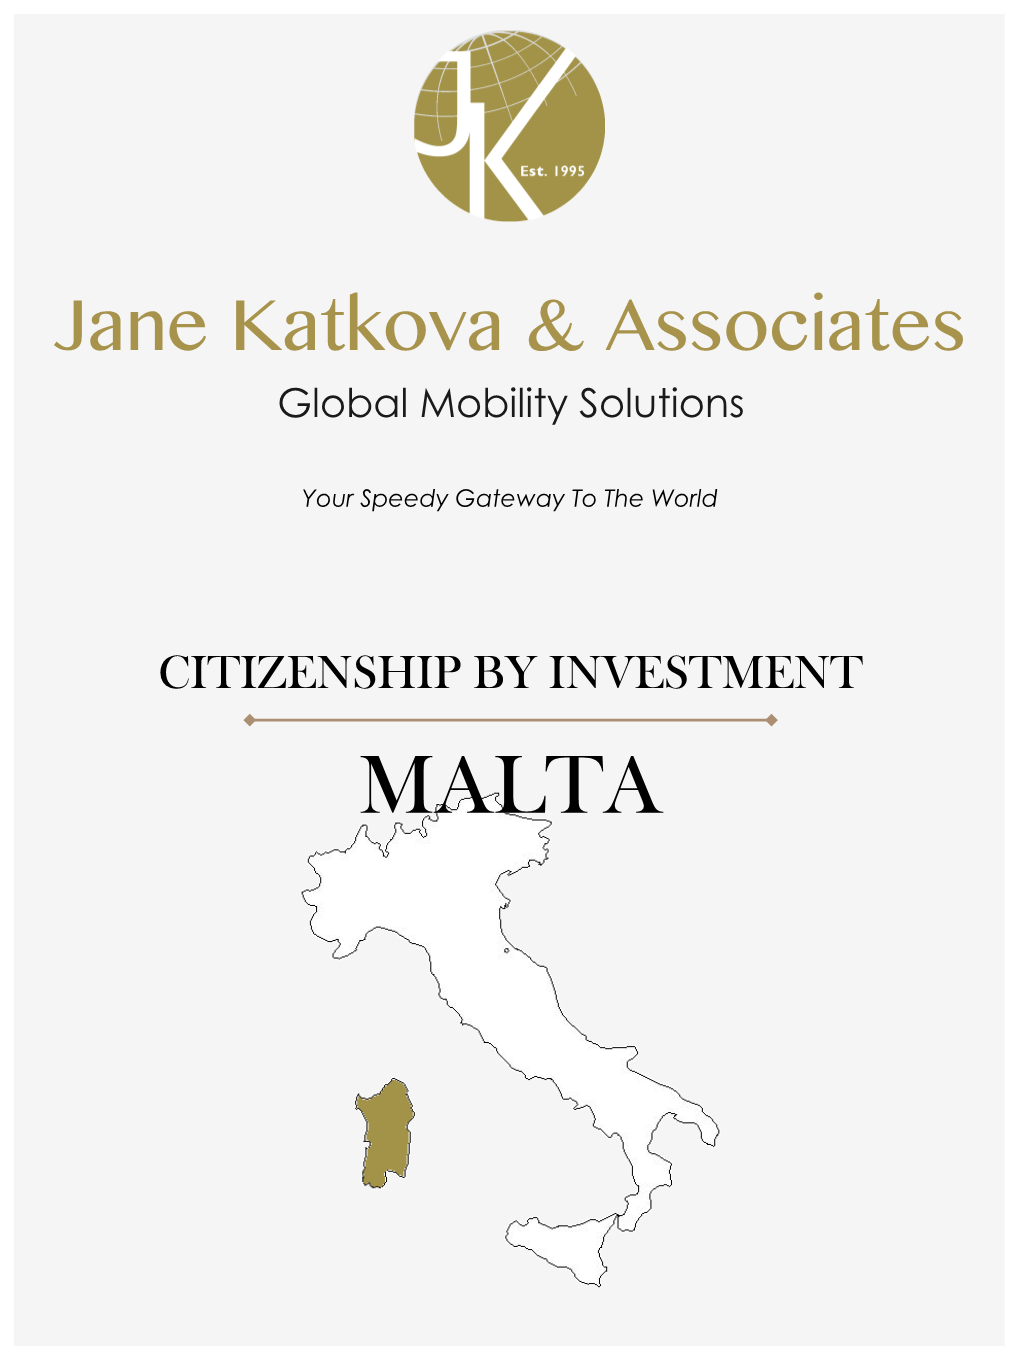 Jane Katkova & Associates